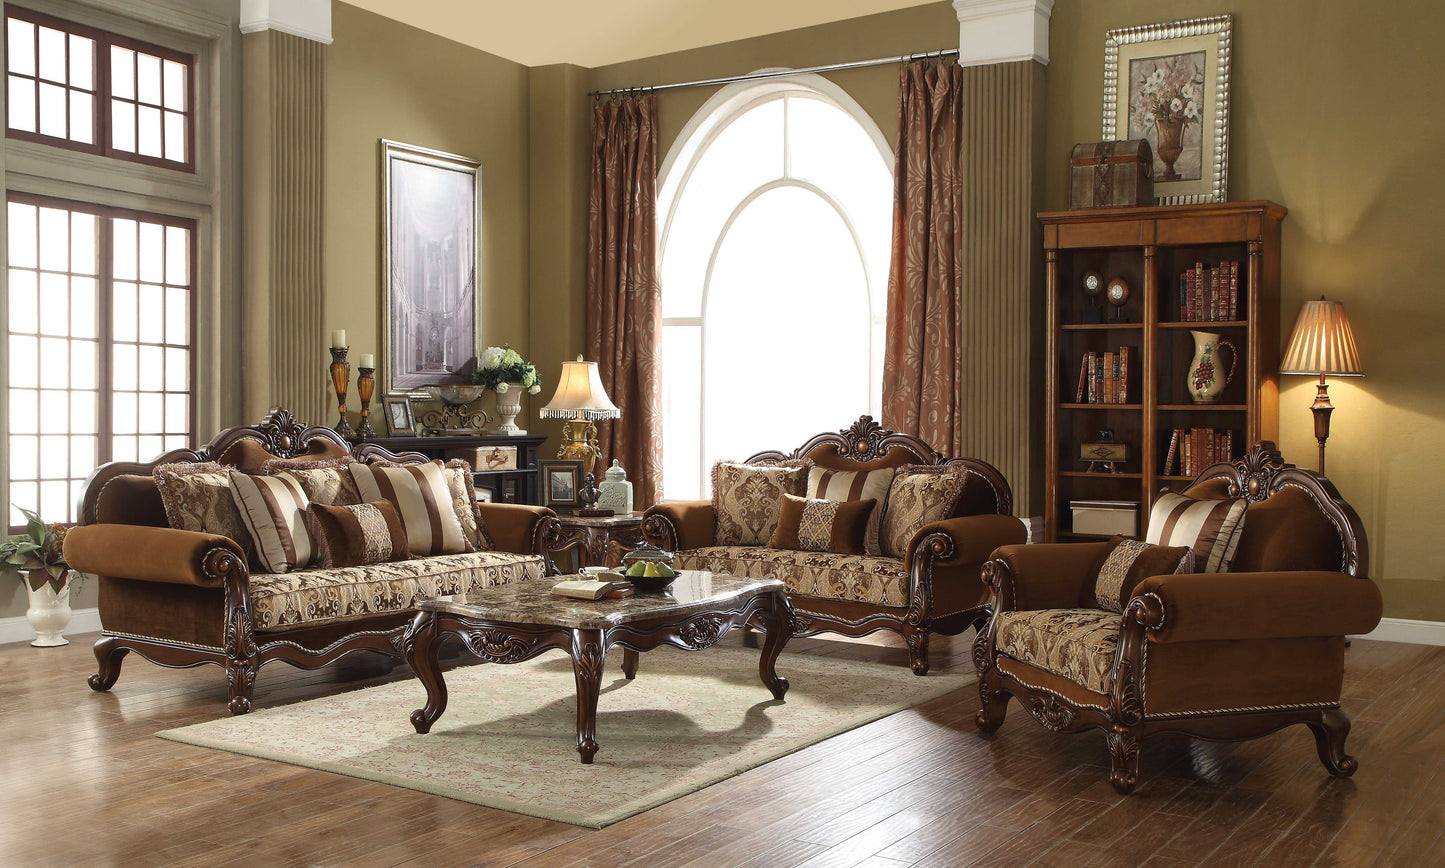 37' X 89' X 46' Fabric Cherry Oak Upholstery Wood LegTrim Sofa w6 Pillows